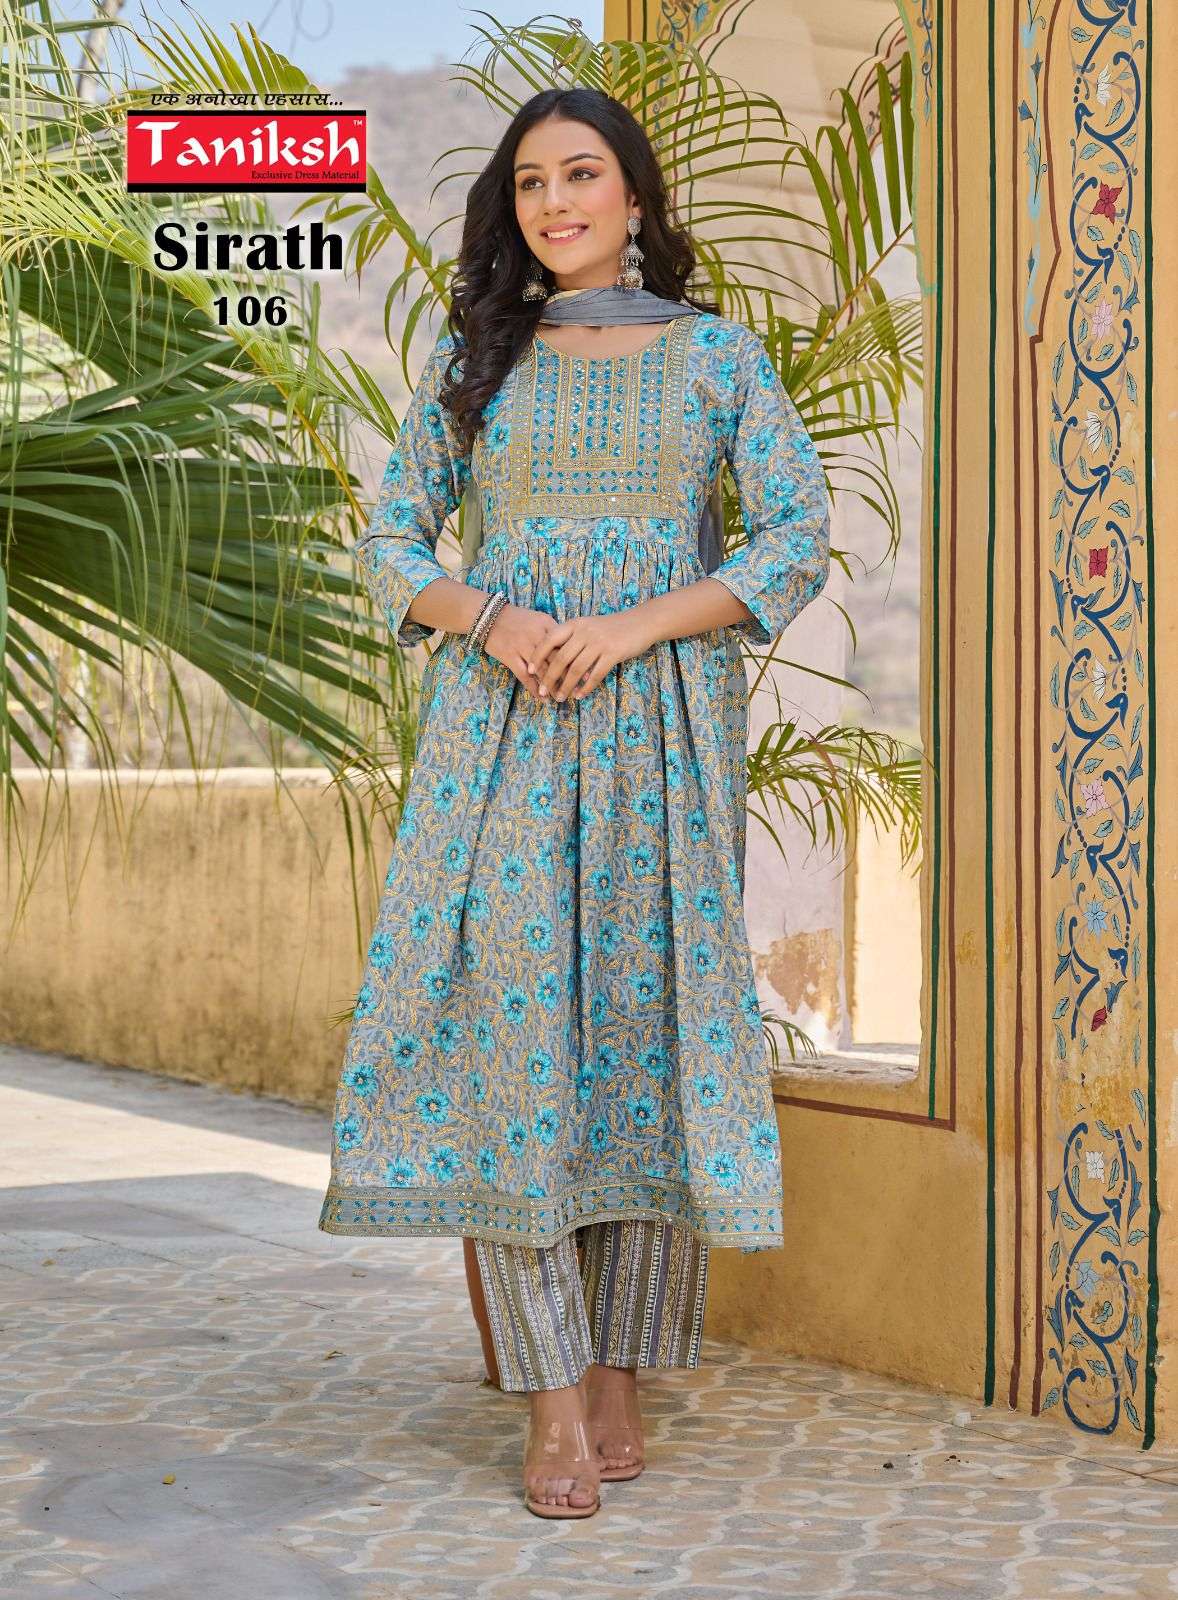 taniksh sirath 101-108 series trendy designer salwar suits catalogue online supplier surat